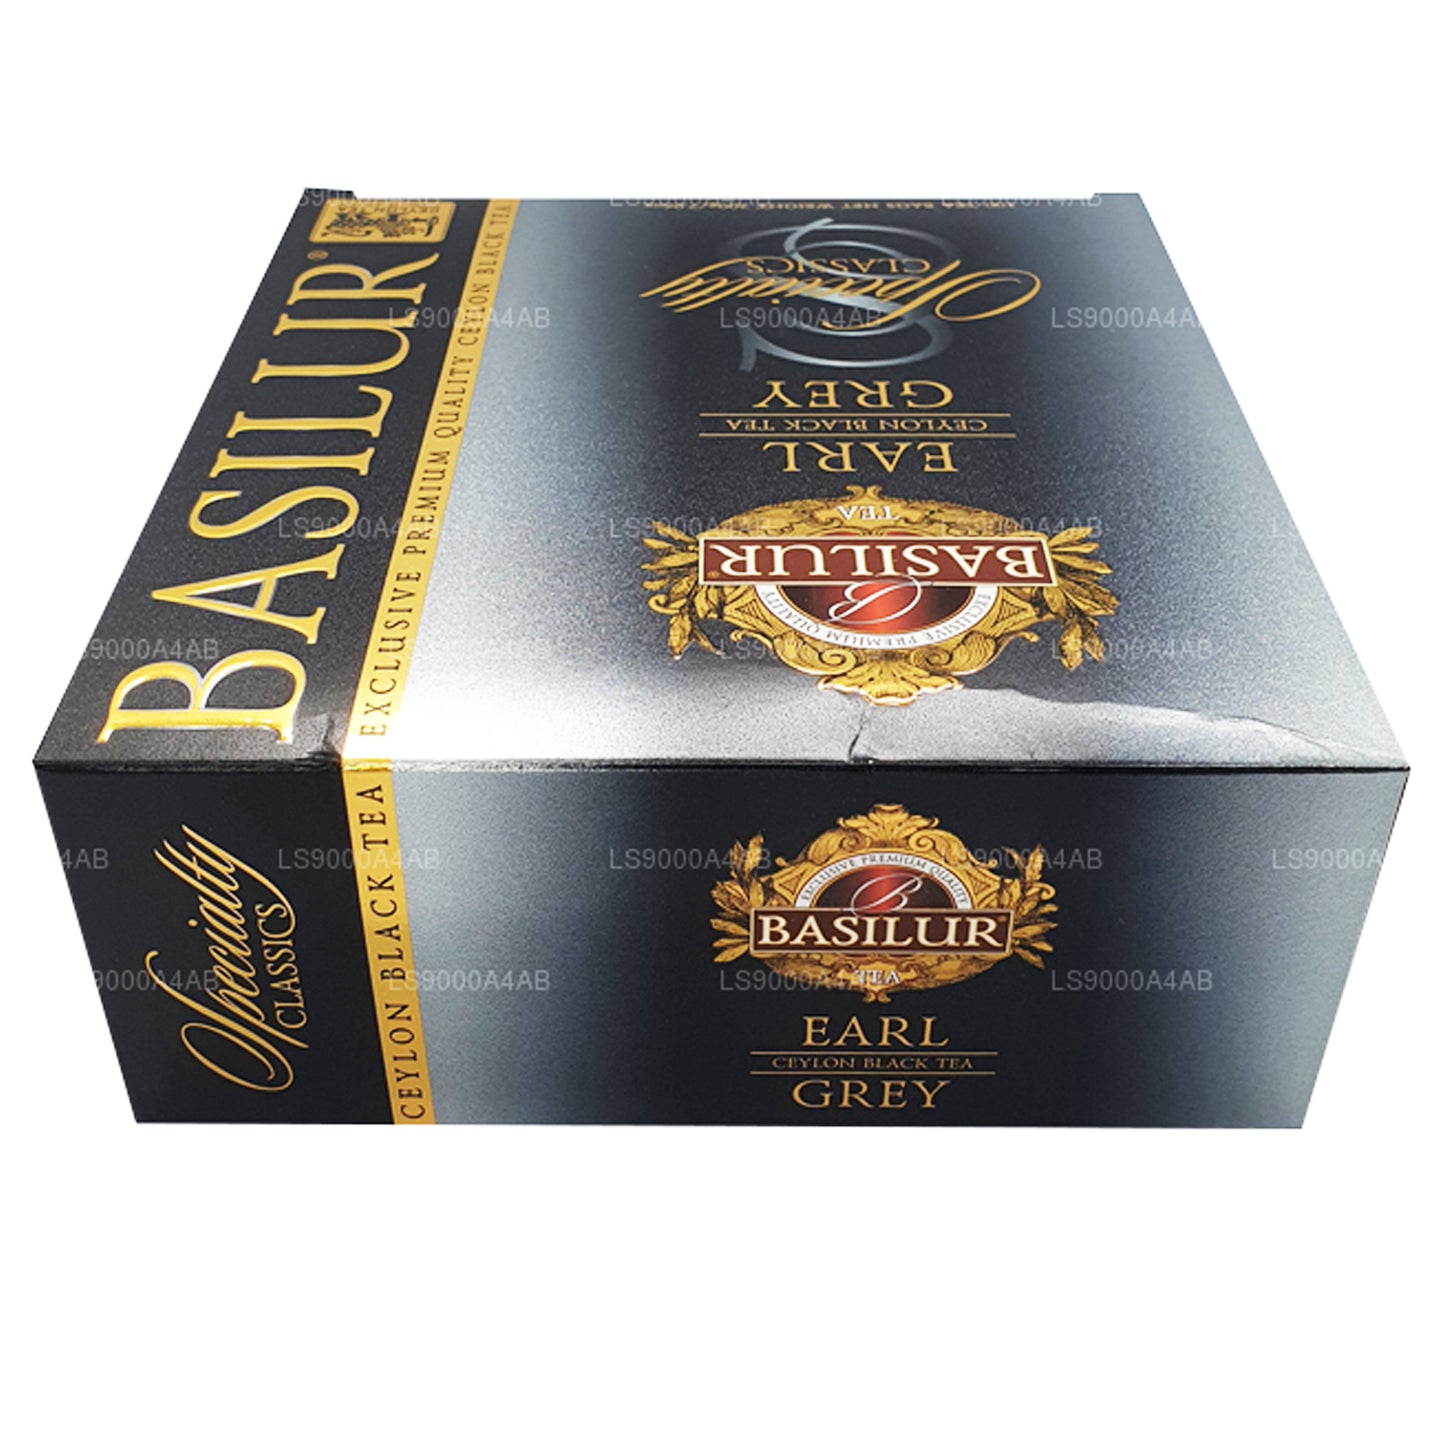 Té negro de Ceilán Basilur Speciality Classics Earl Grey (200 g) 100 bolsitas de té